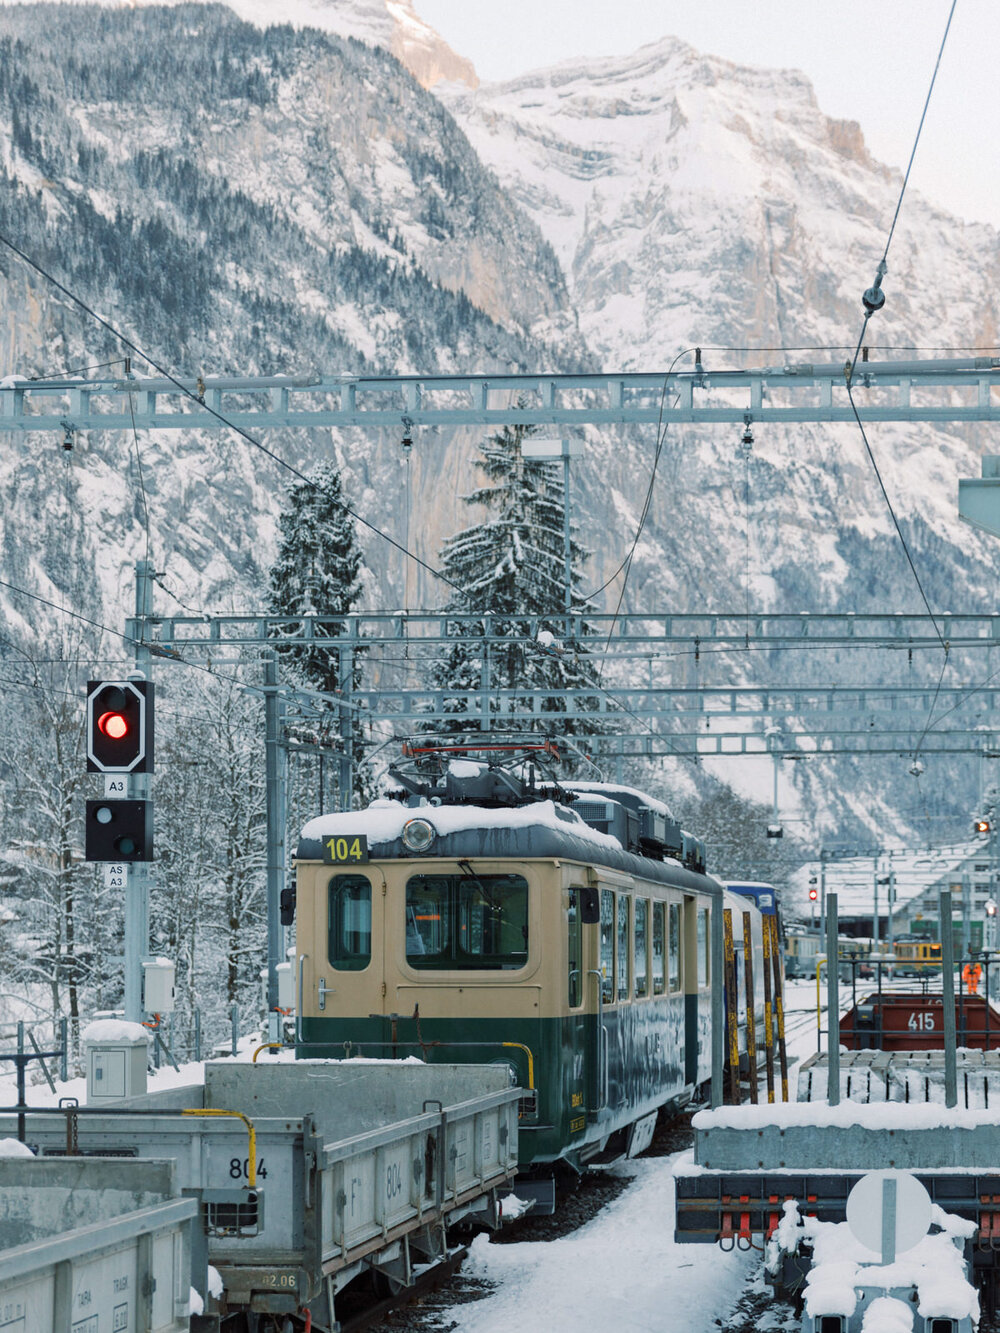 Swiss mountain train at Interlaken station